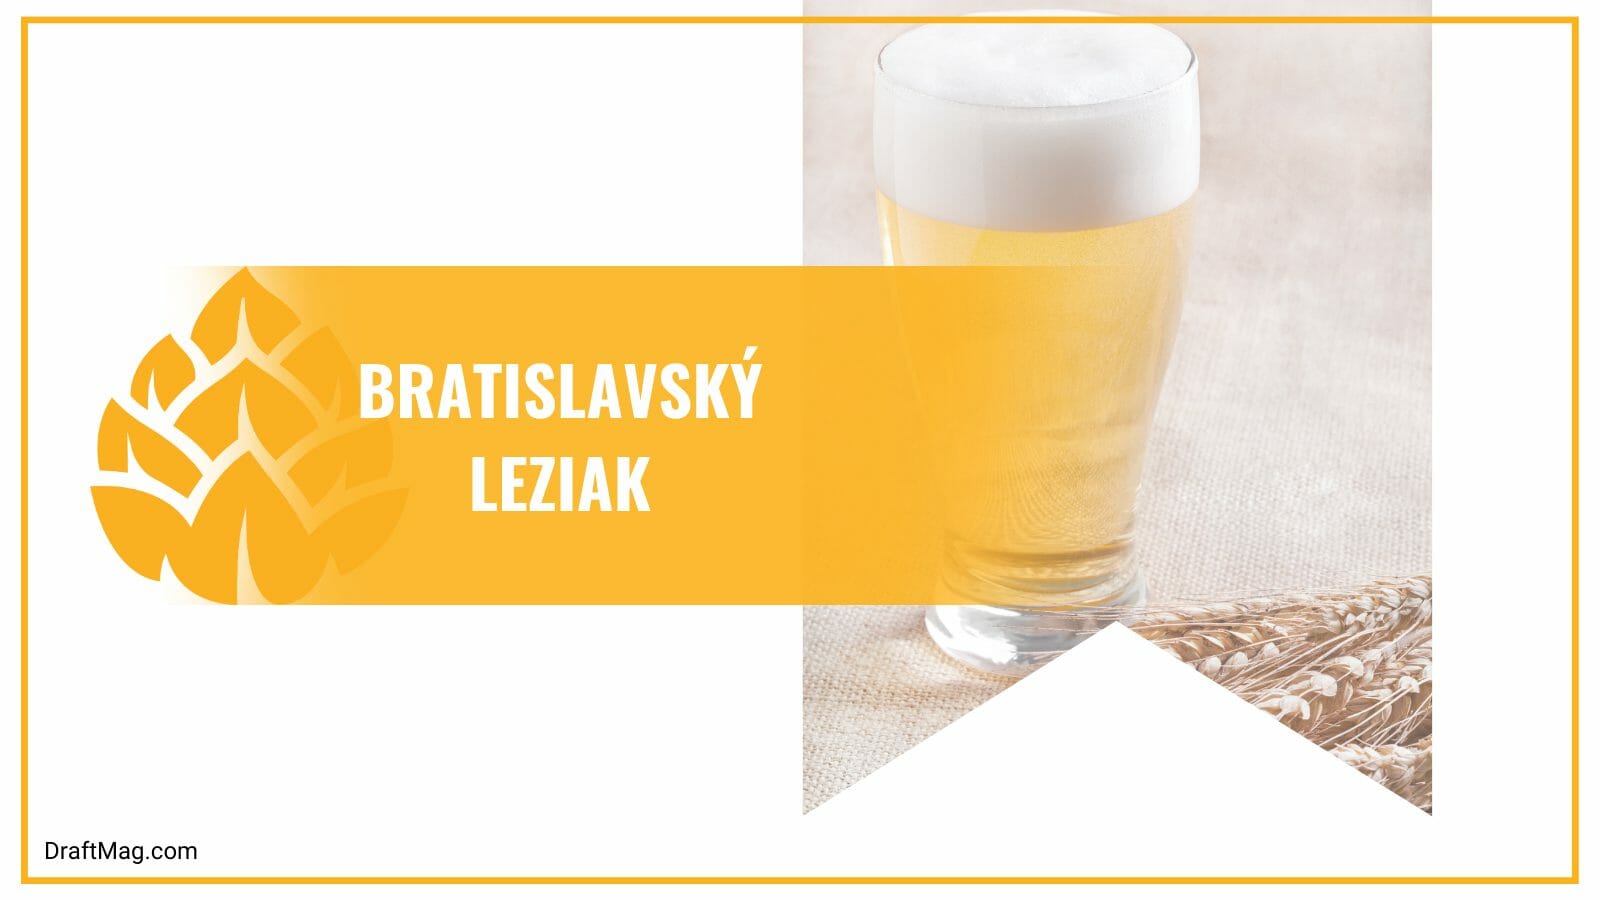 Bratislavsky leziak summer heat beer